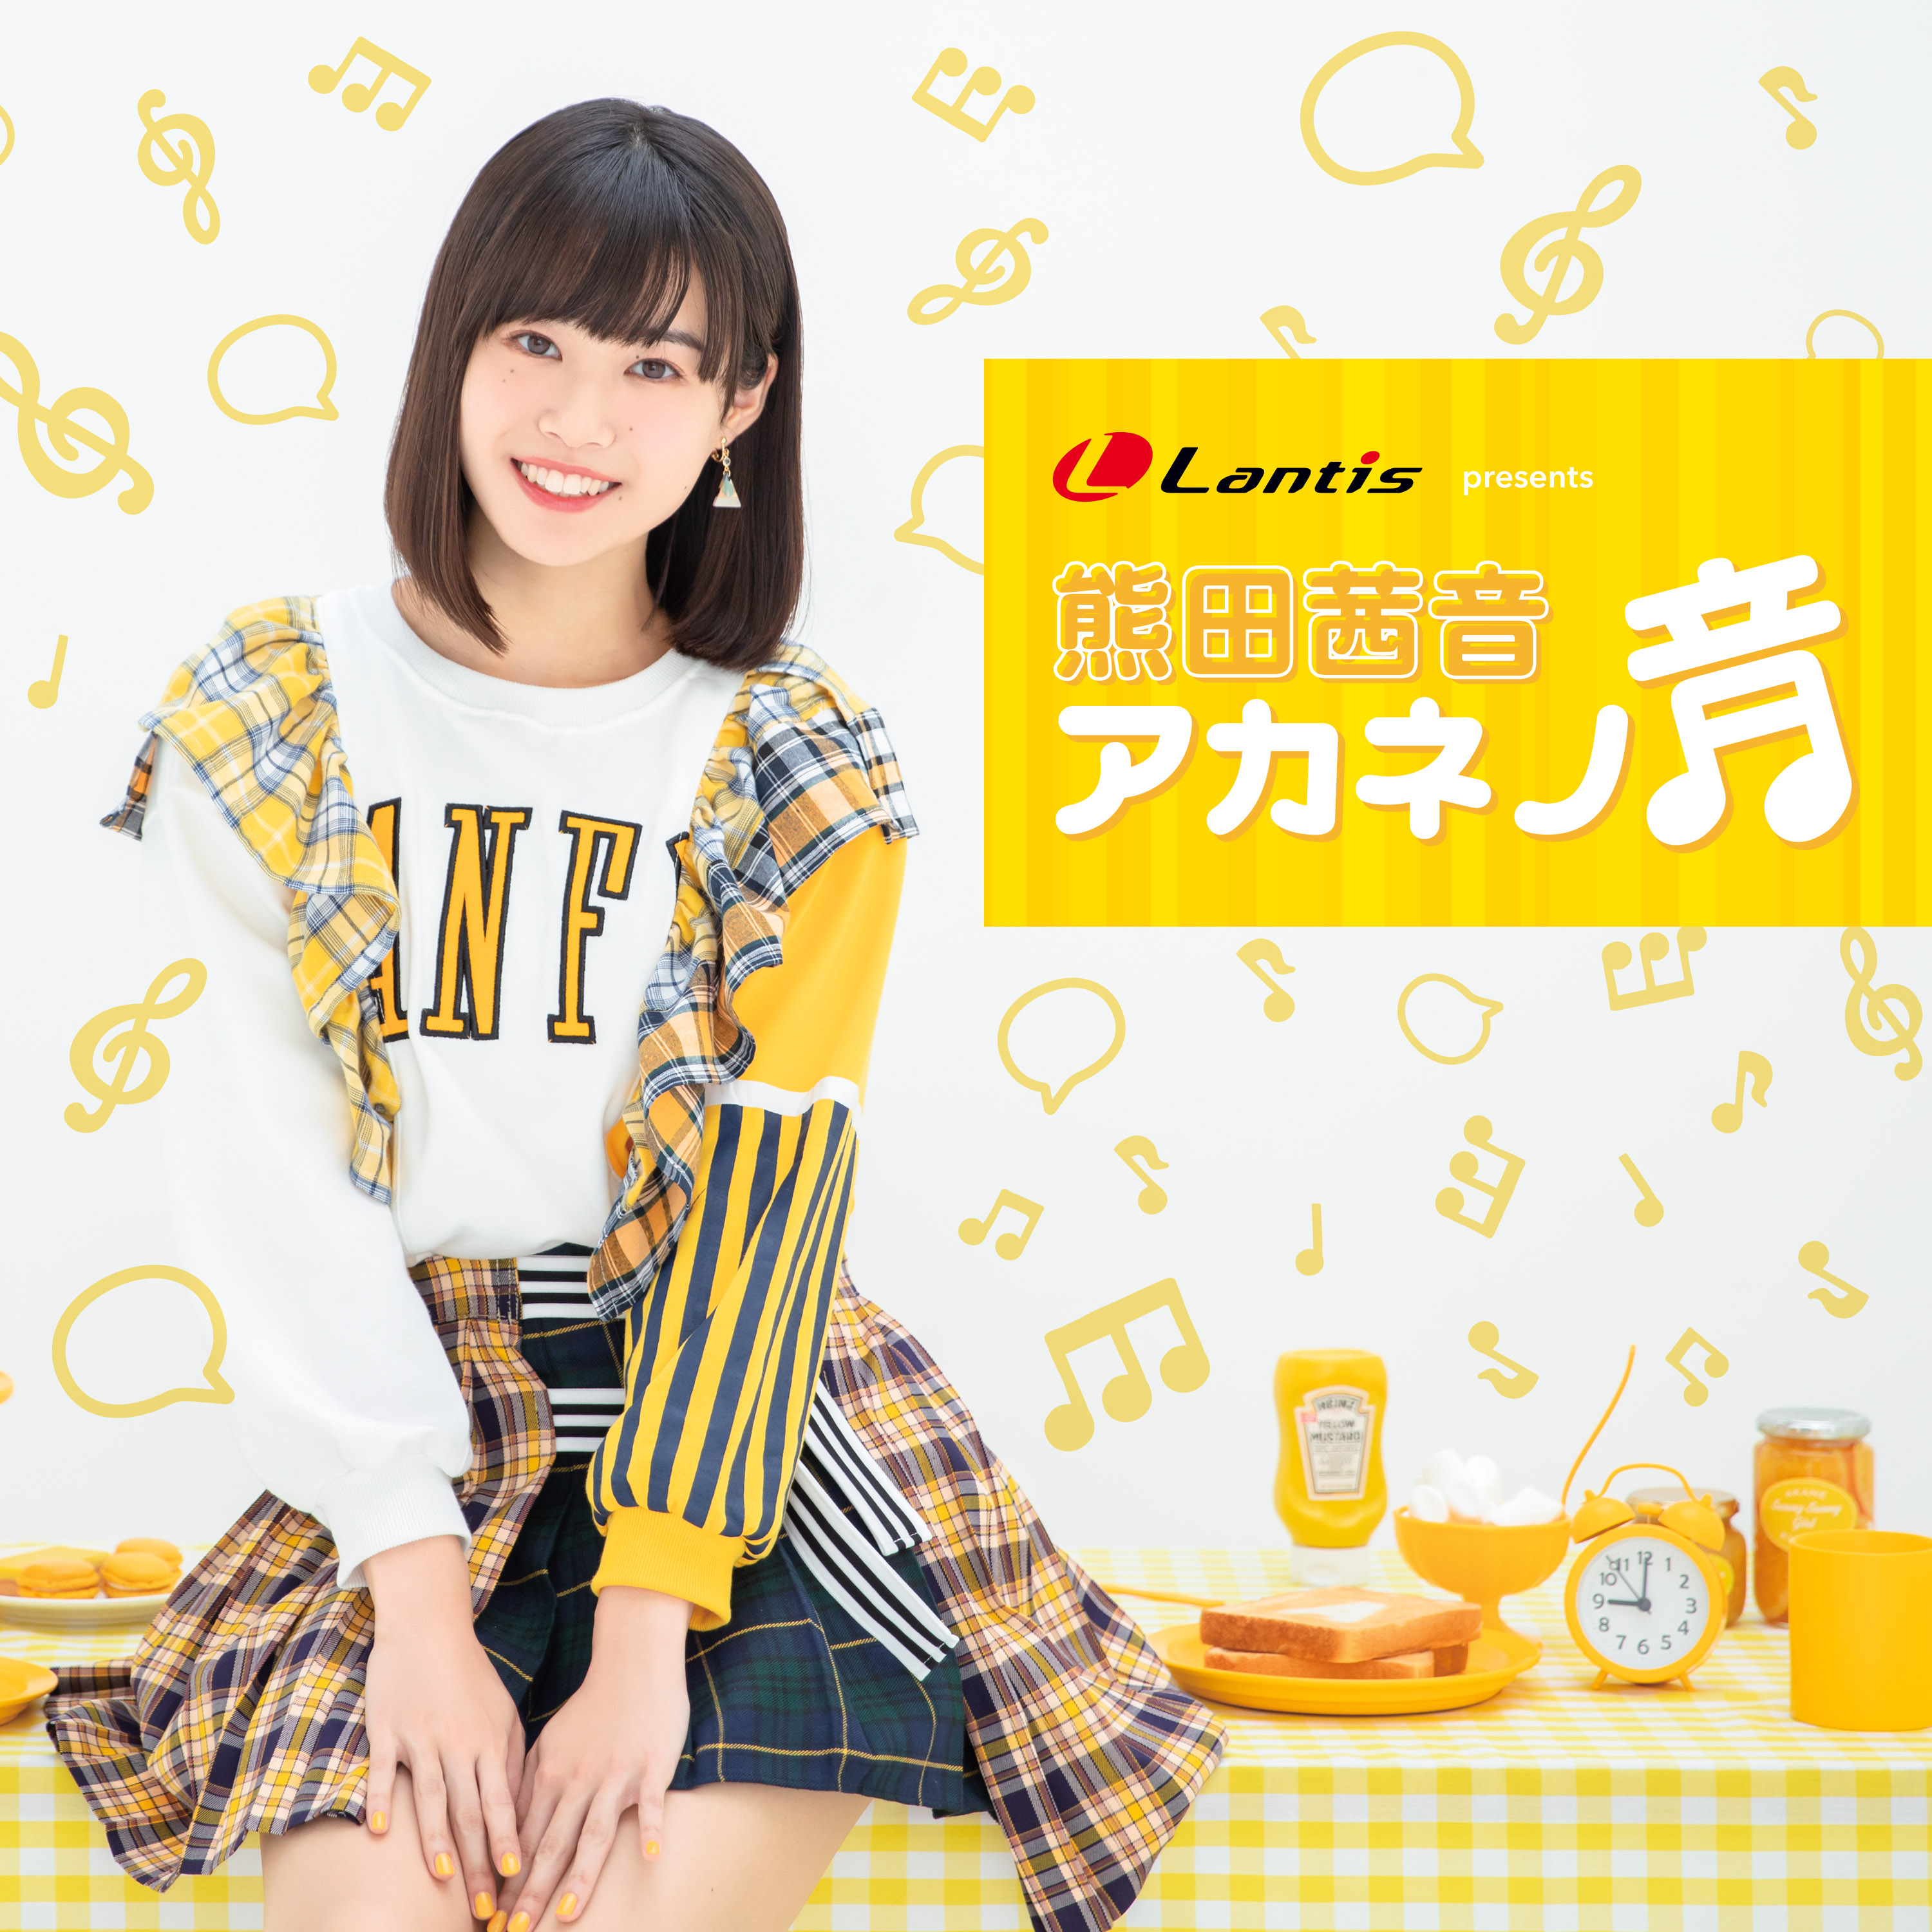 Lantis Presents 熊田茜音 アカネノ音 #53-56